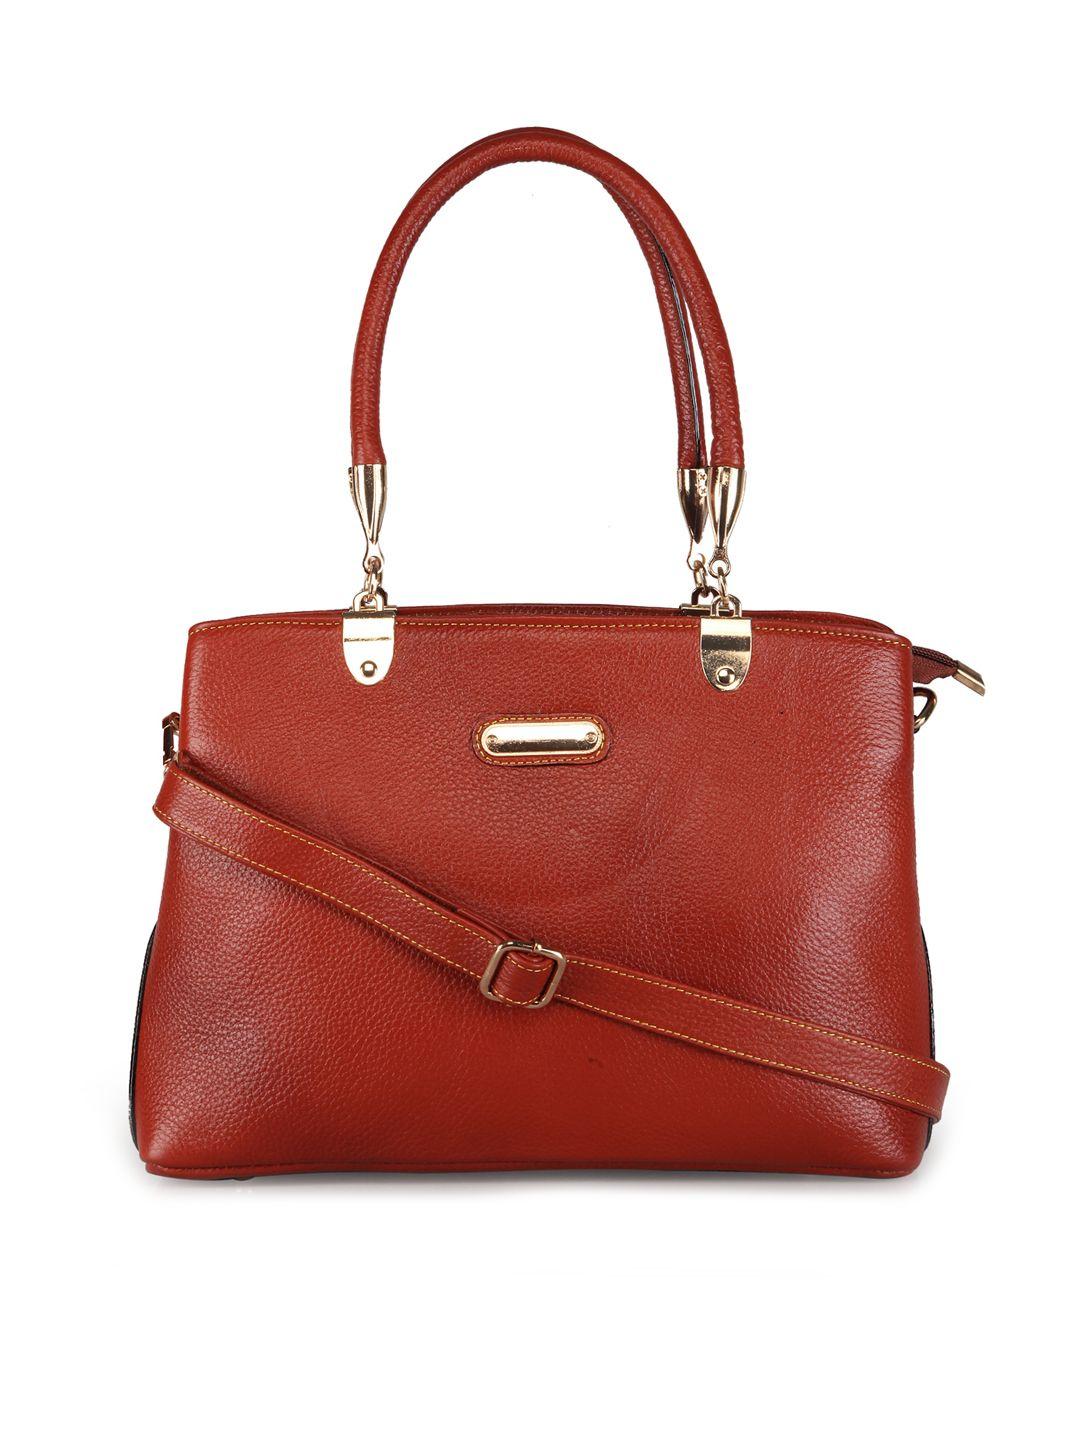 genwayne leather shopper handheld bag